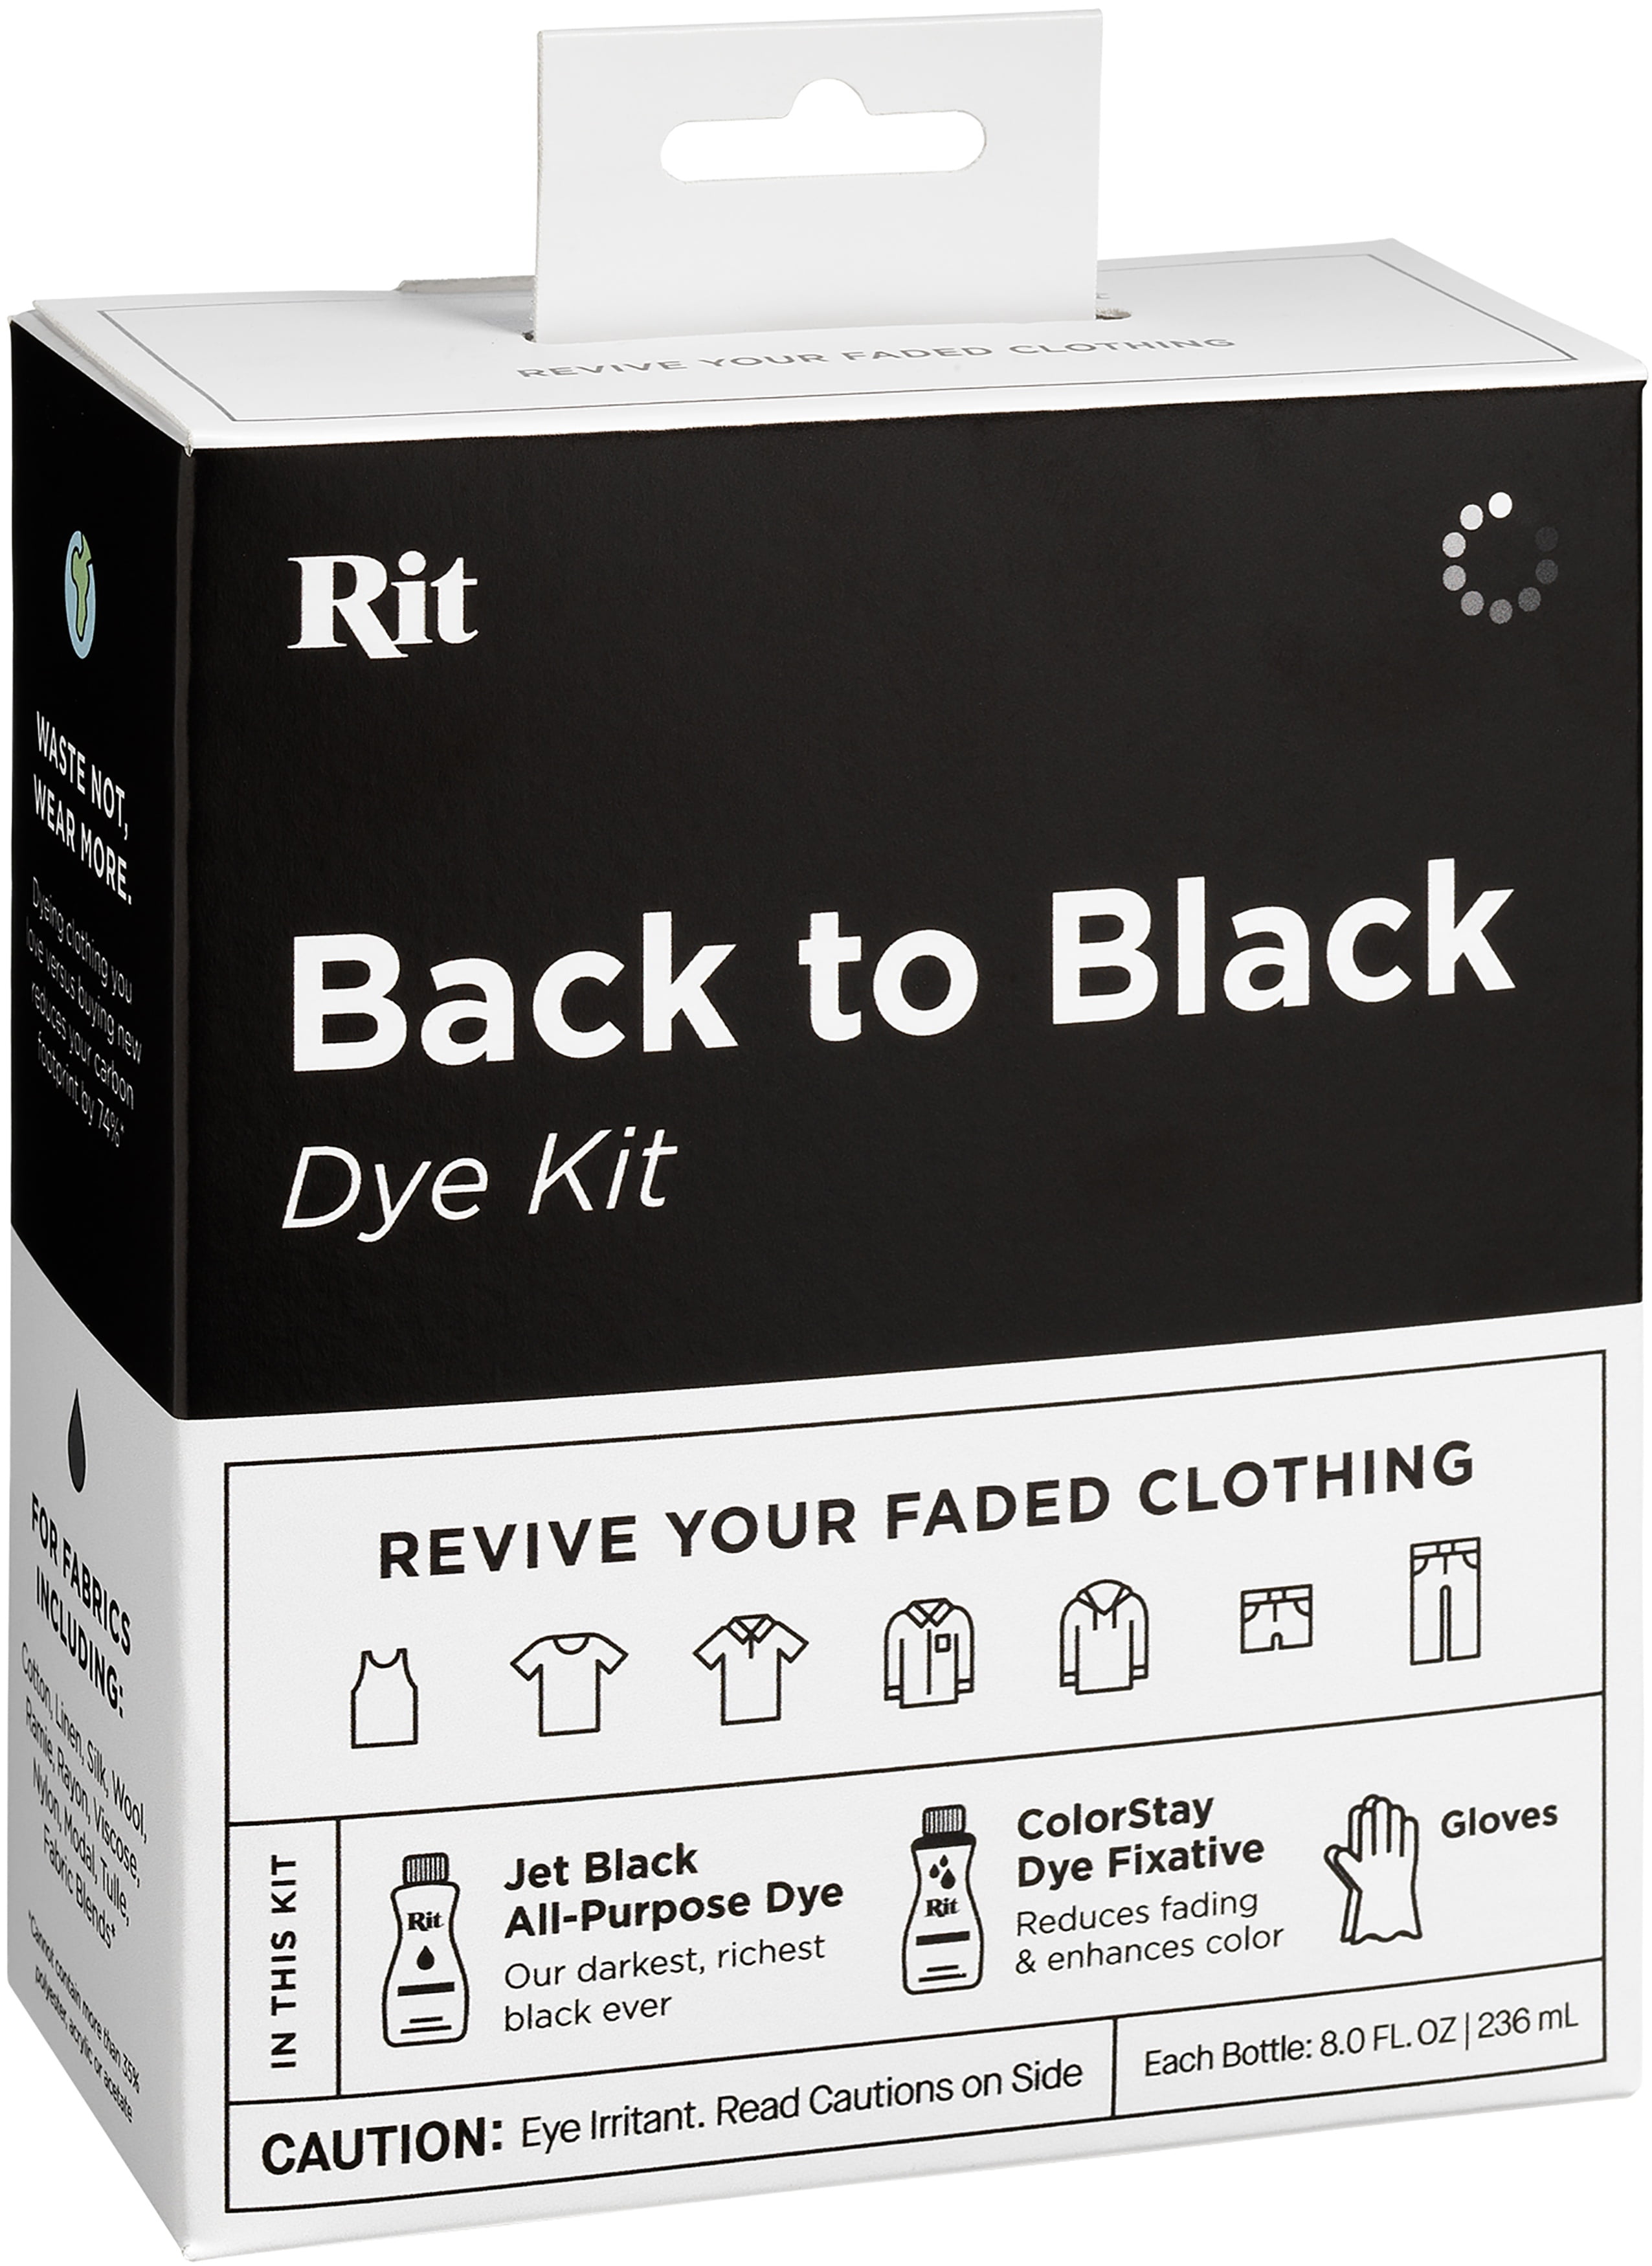 Using @Rit Dye to turn my clothes black to reflect my soul #ChewTheVib, rit dye tutorial